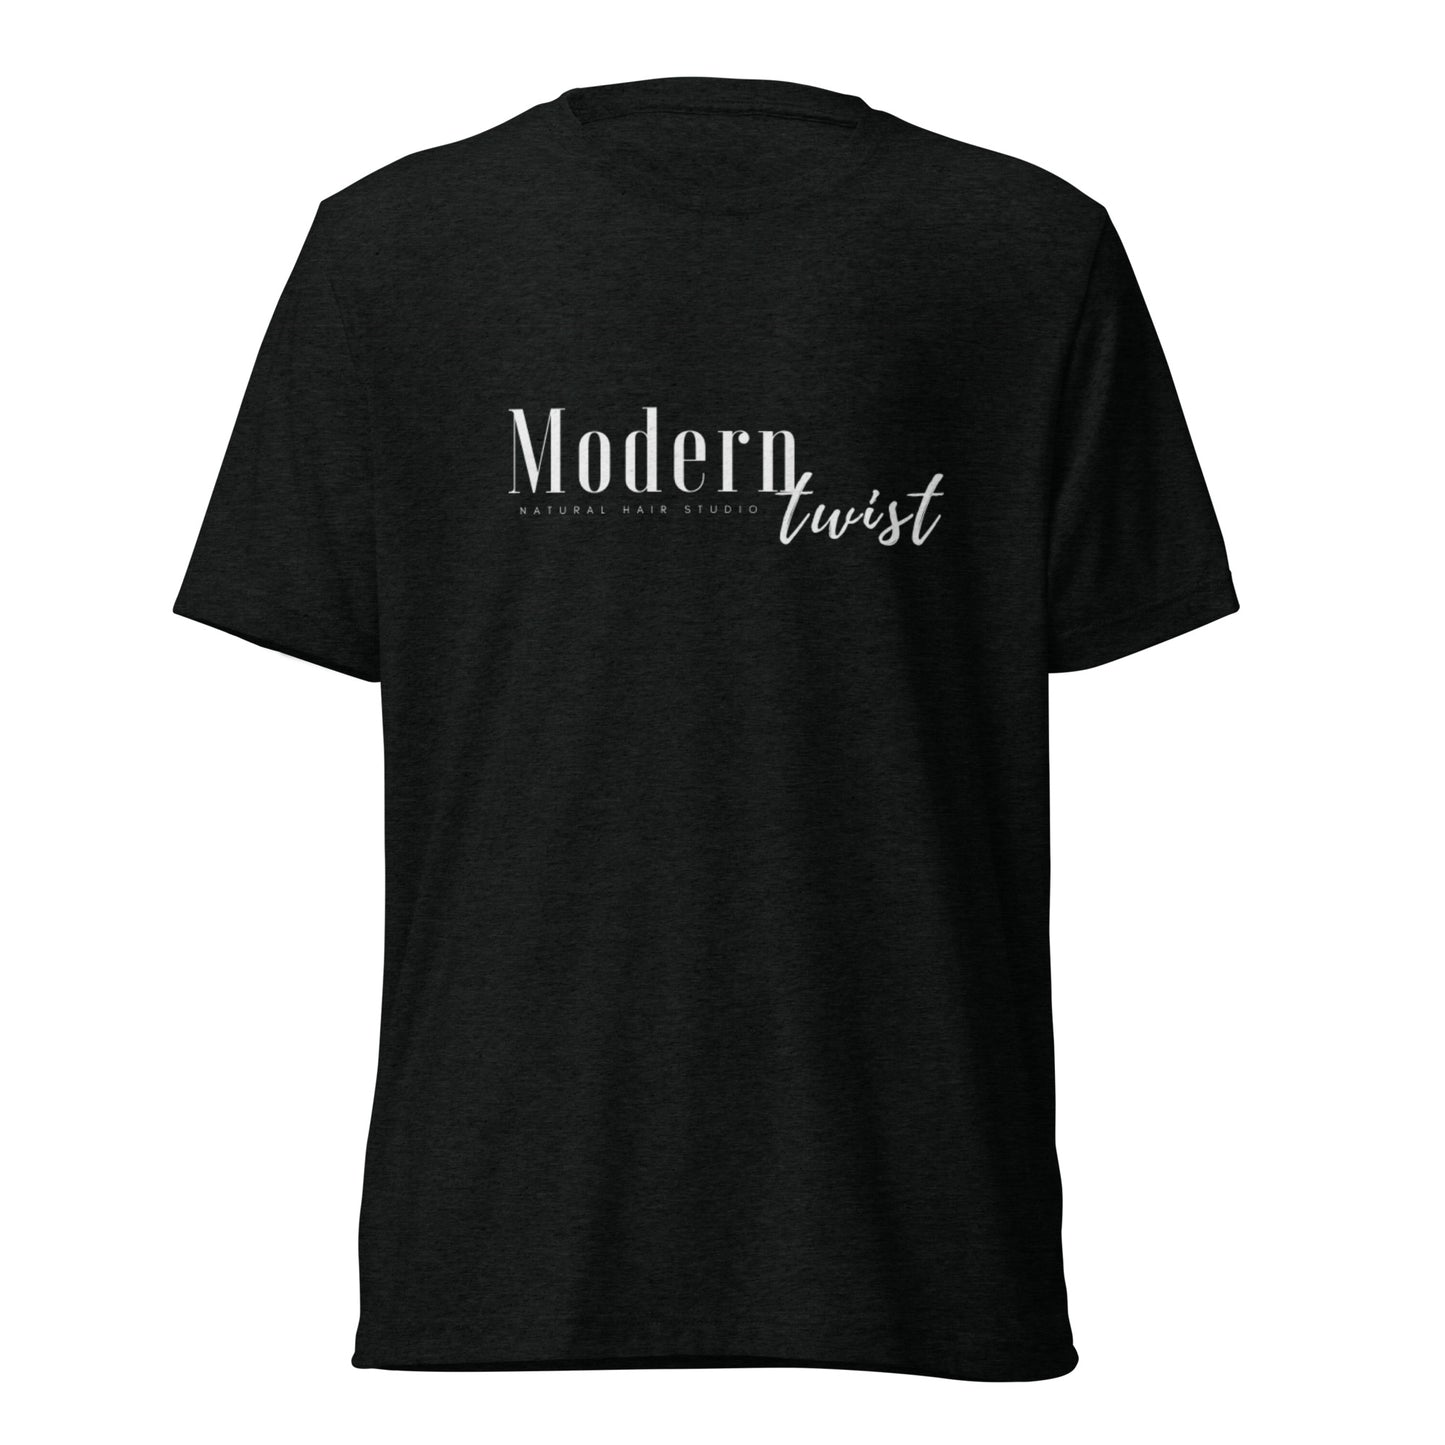 Modern Twist t-shirt